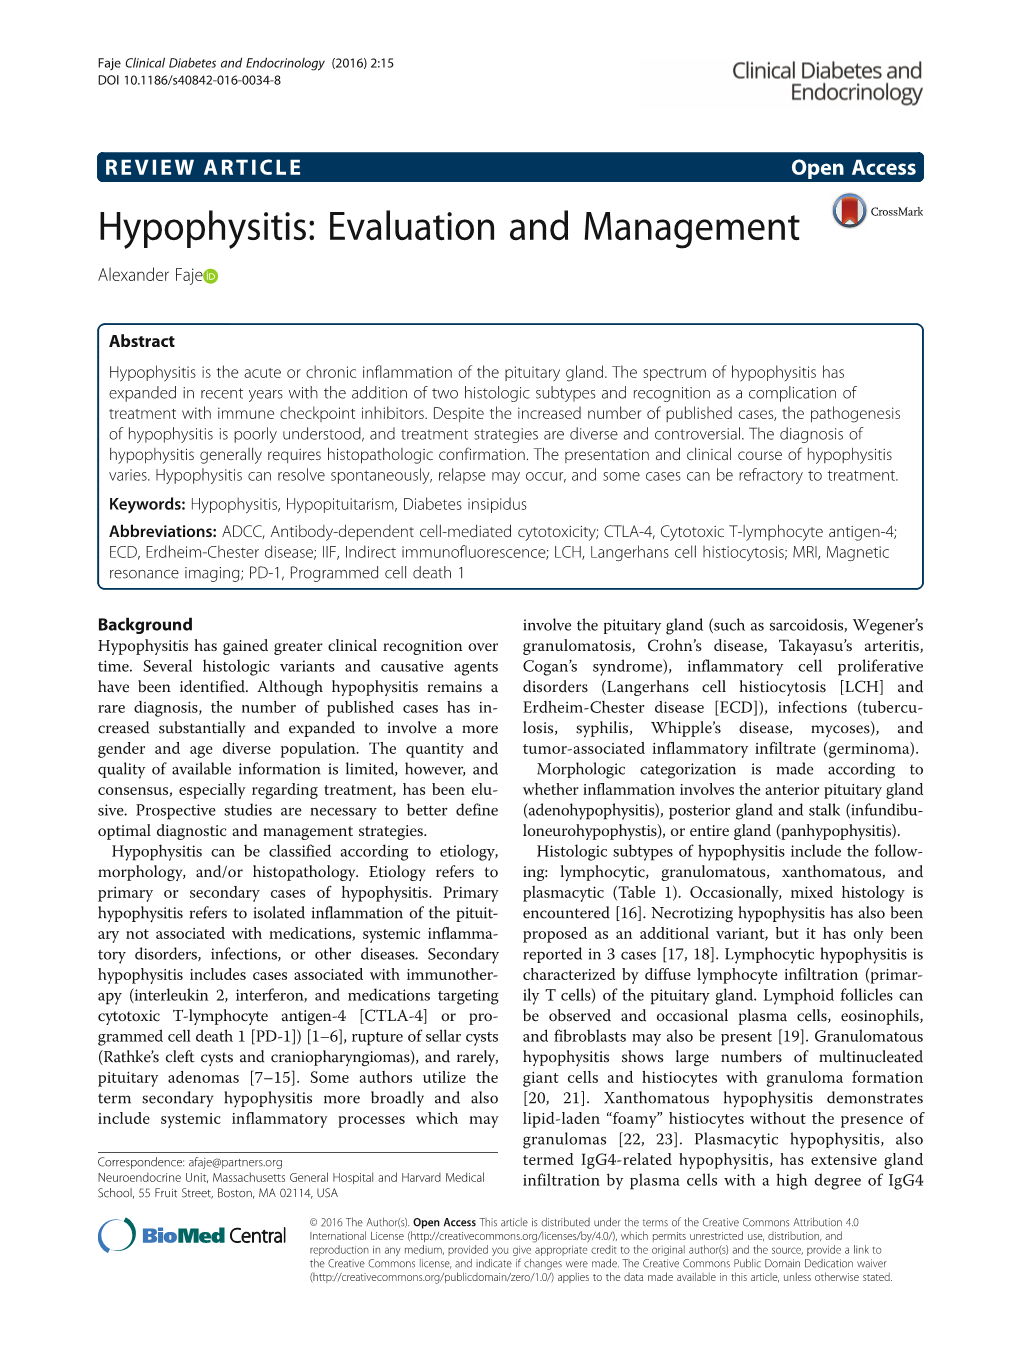 Hypophysitis: Evaluation and Management Alexander Faje